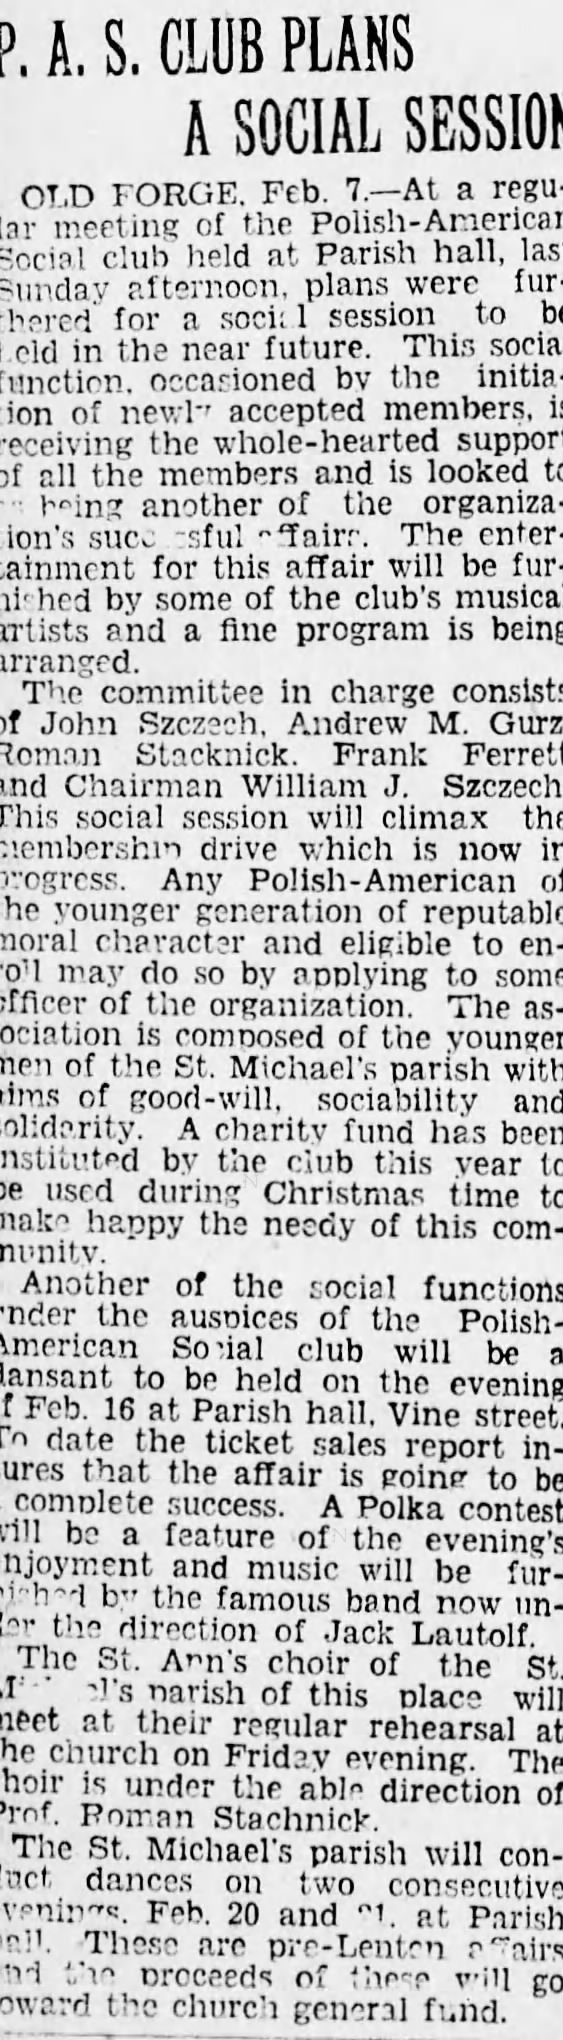 Andrew W. Gurz
social club
6 Feb 1928